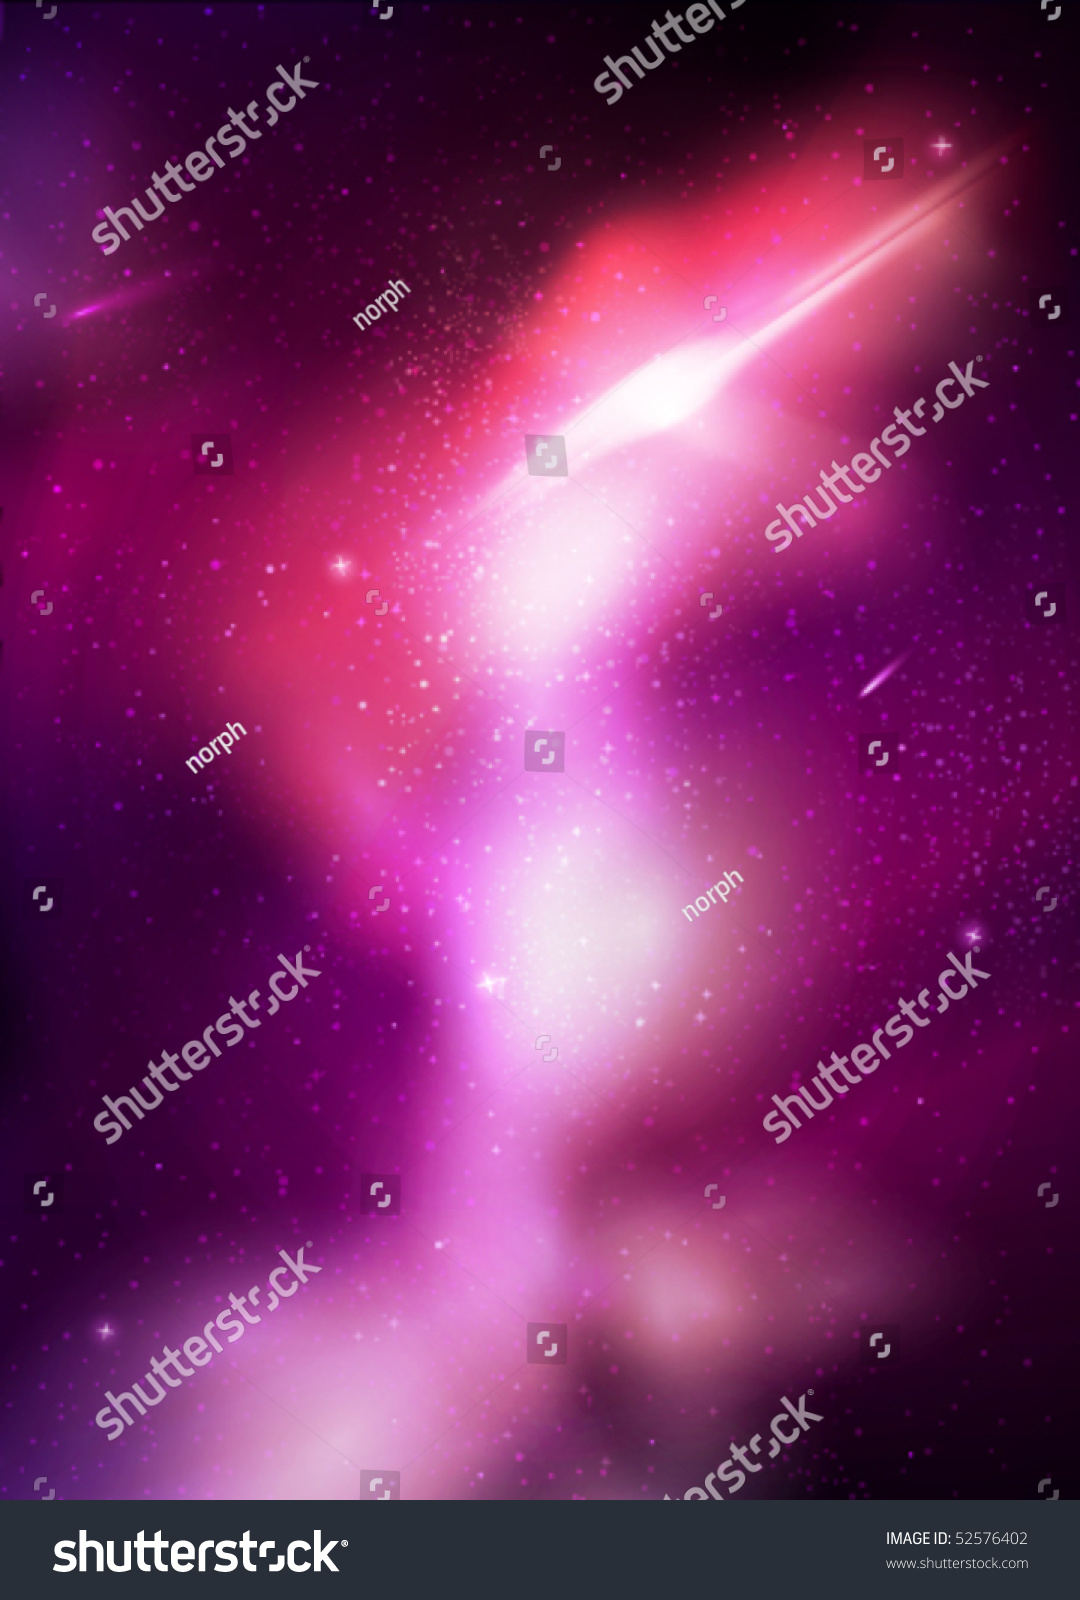 Vector Galaxy Illustration Stock Vector (Royalty Free) 52576402